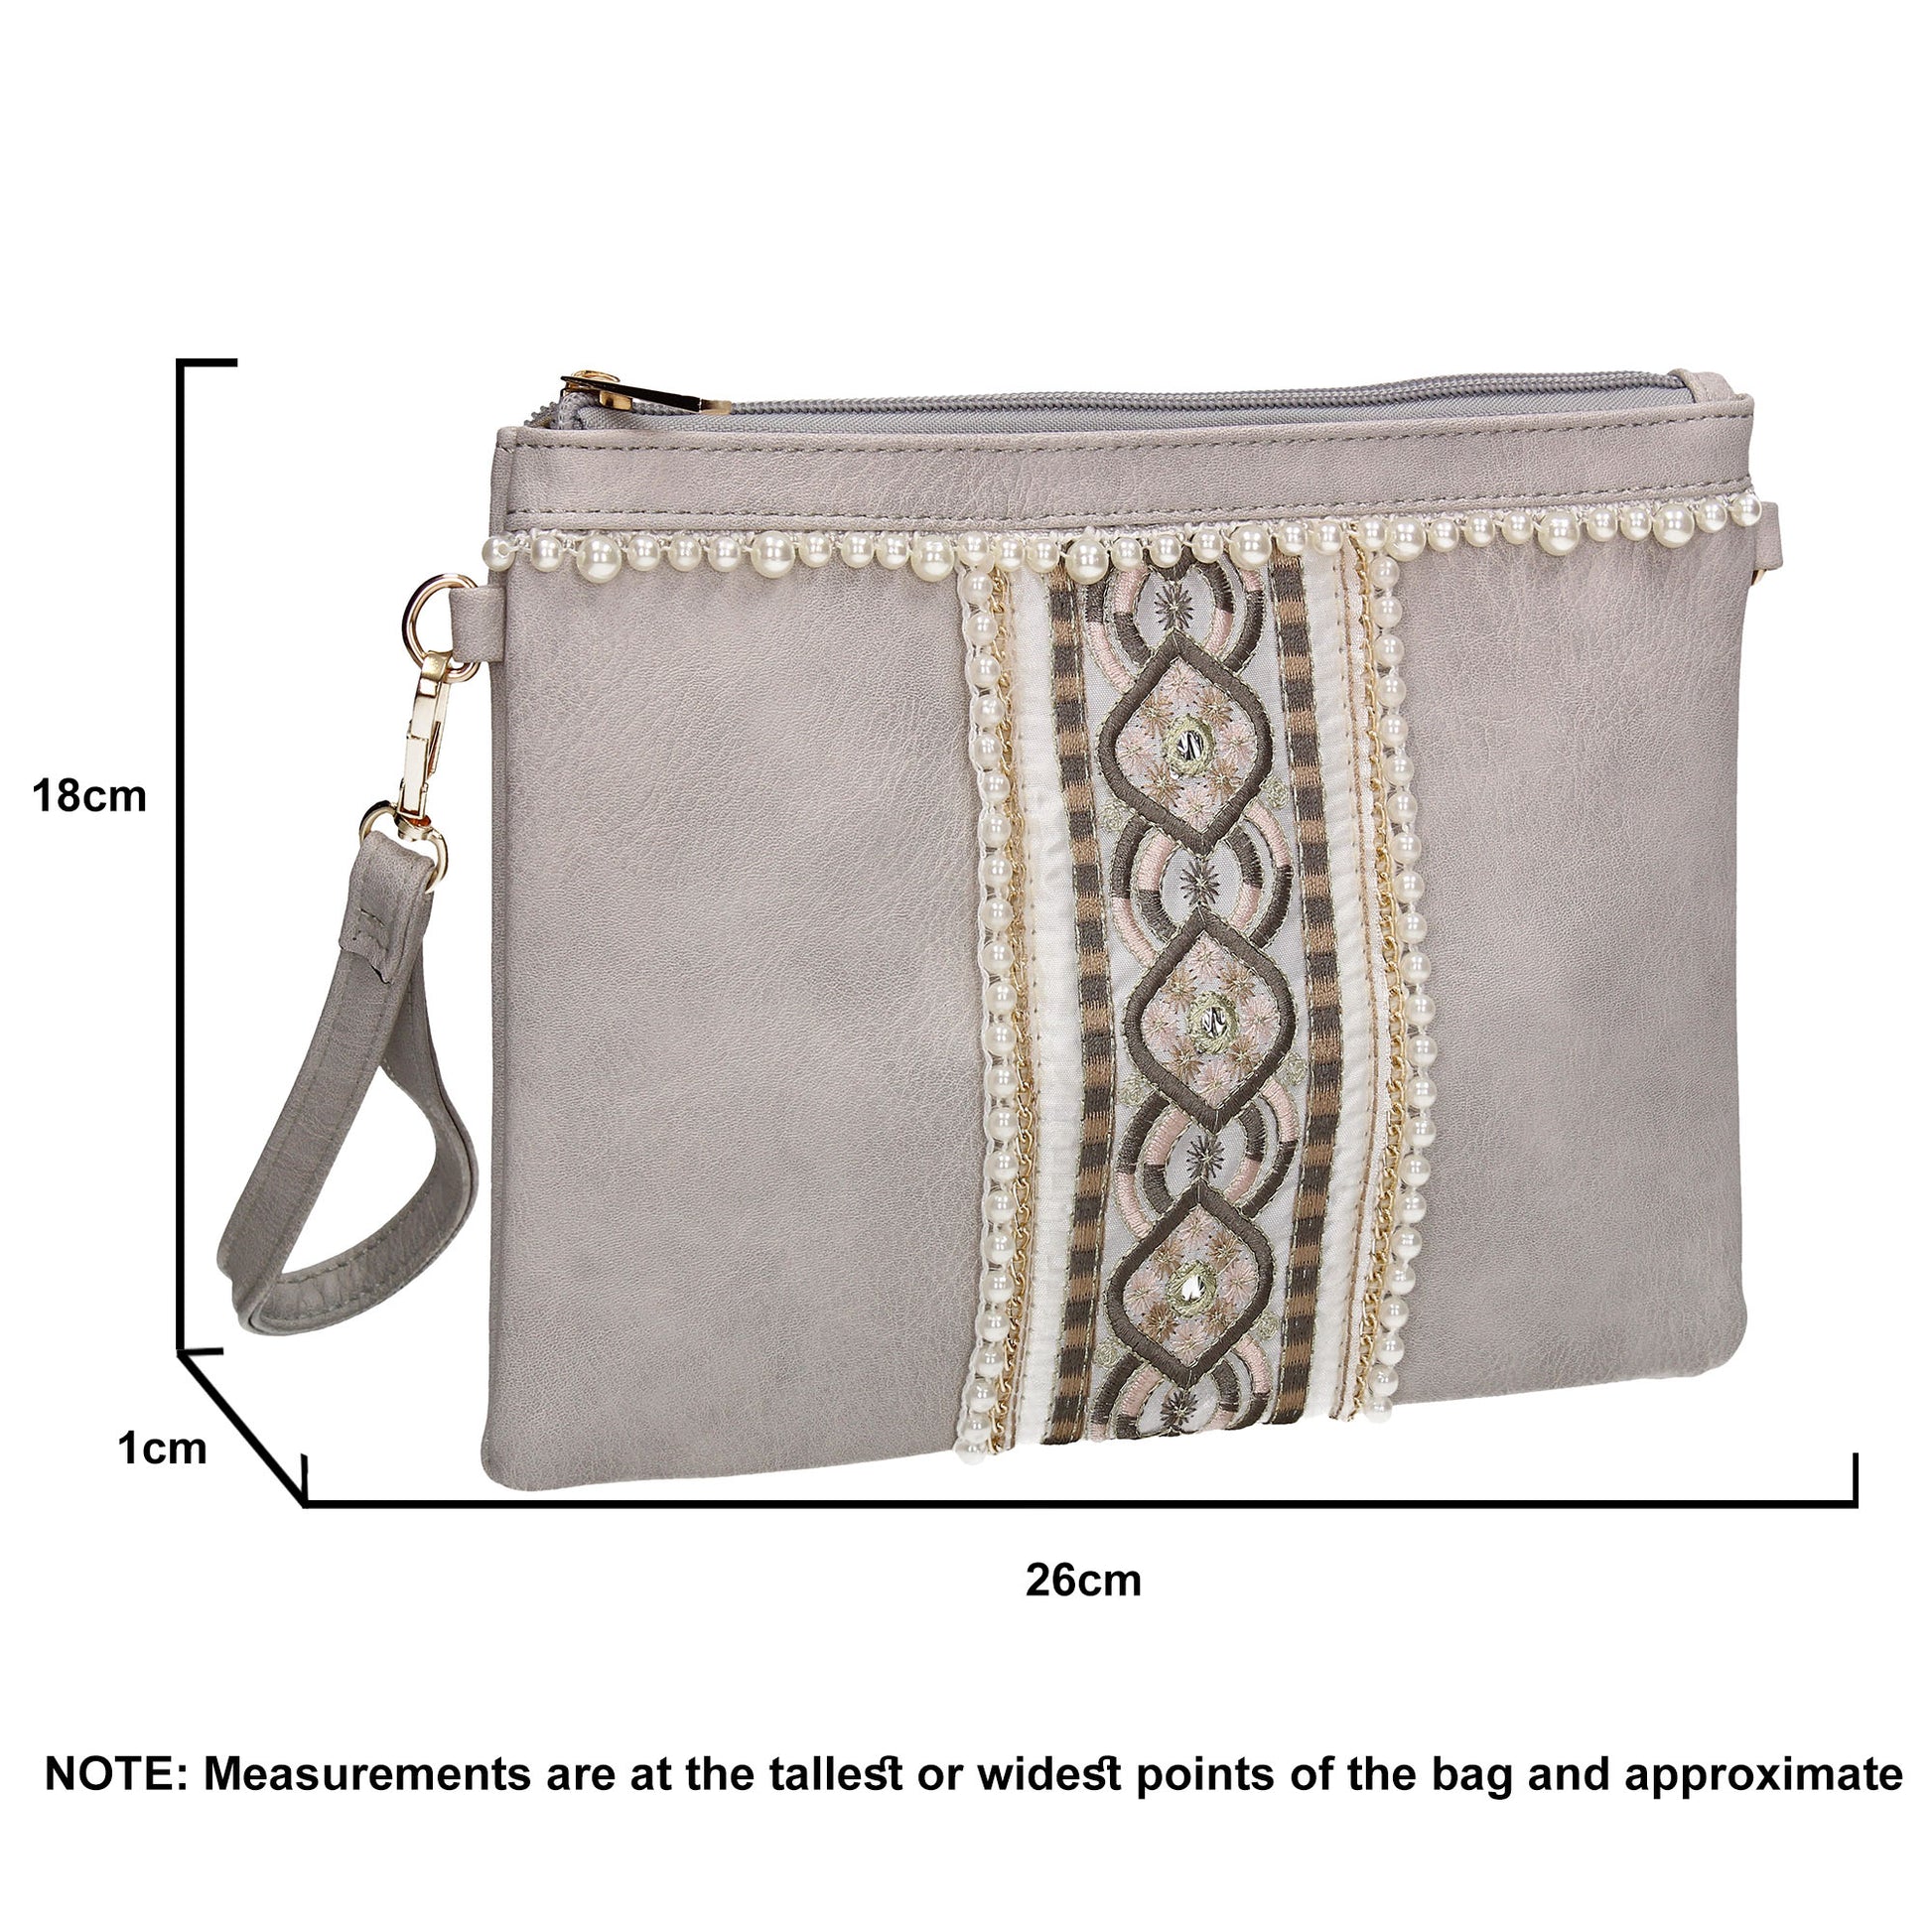 SWANKYSWANS Delilah Clutch Bag Neutral Grey Cute Cheap Clutch Bag For Weddings School and Work